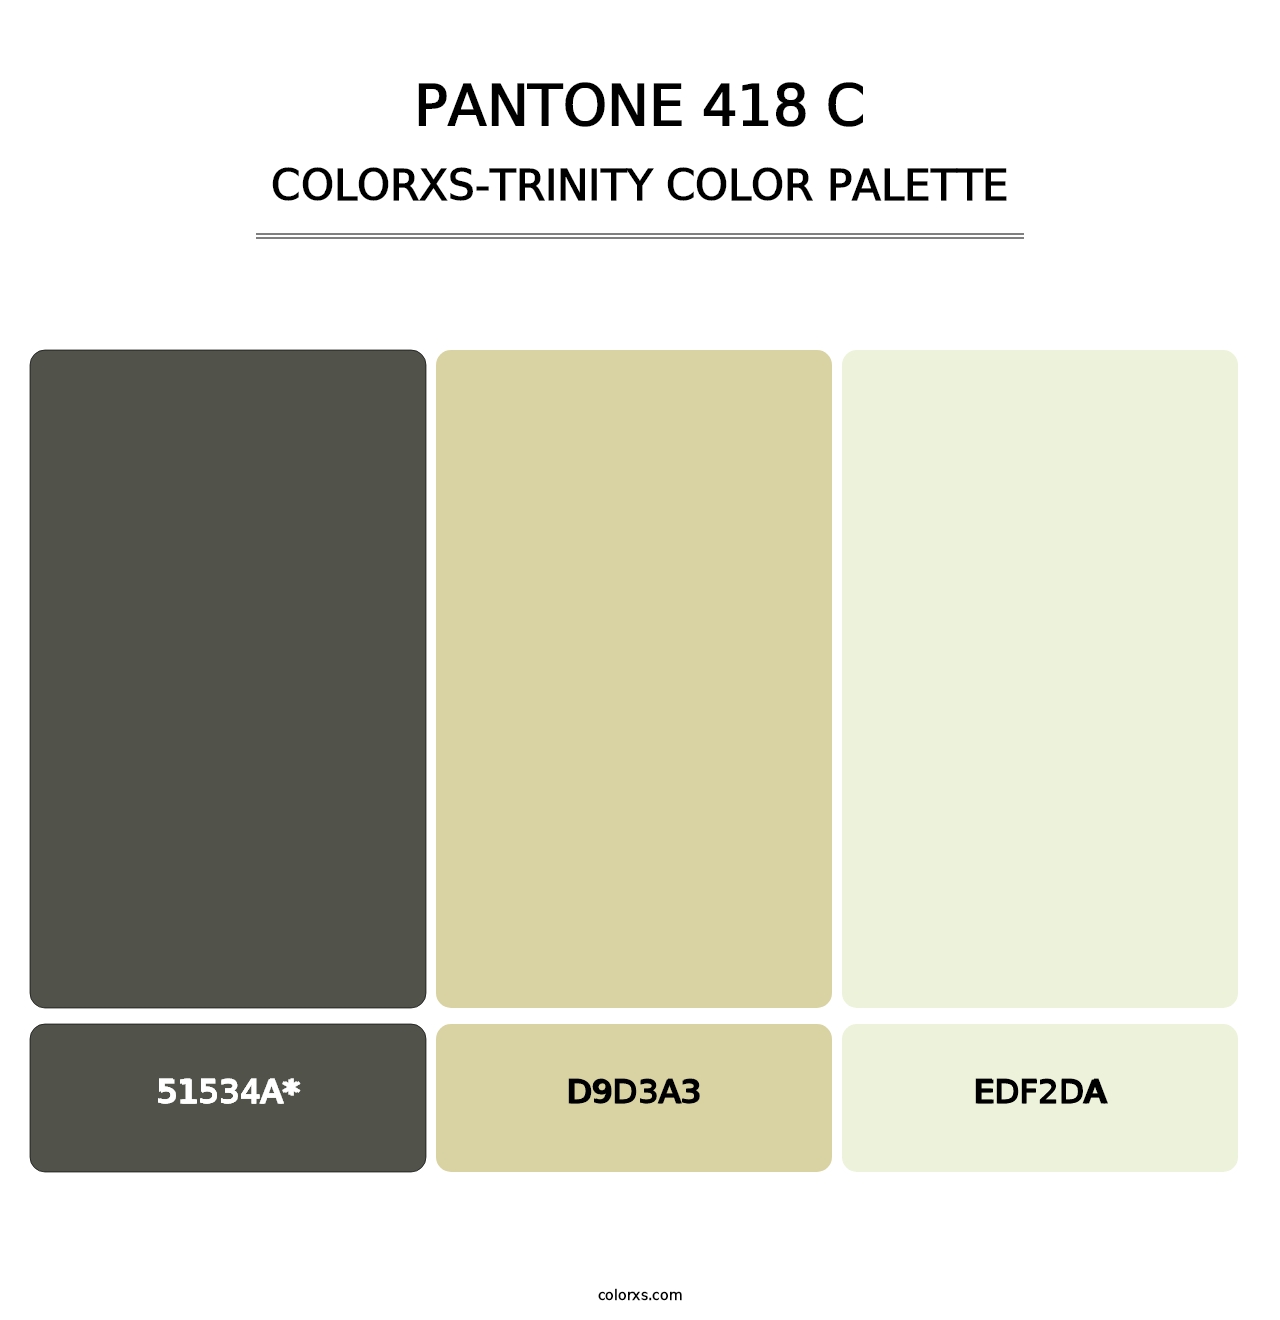 PANTONE 418 C - Colorxs Trinity Palette